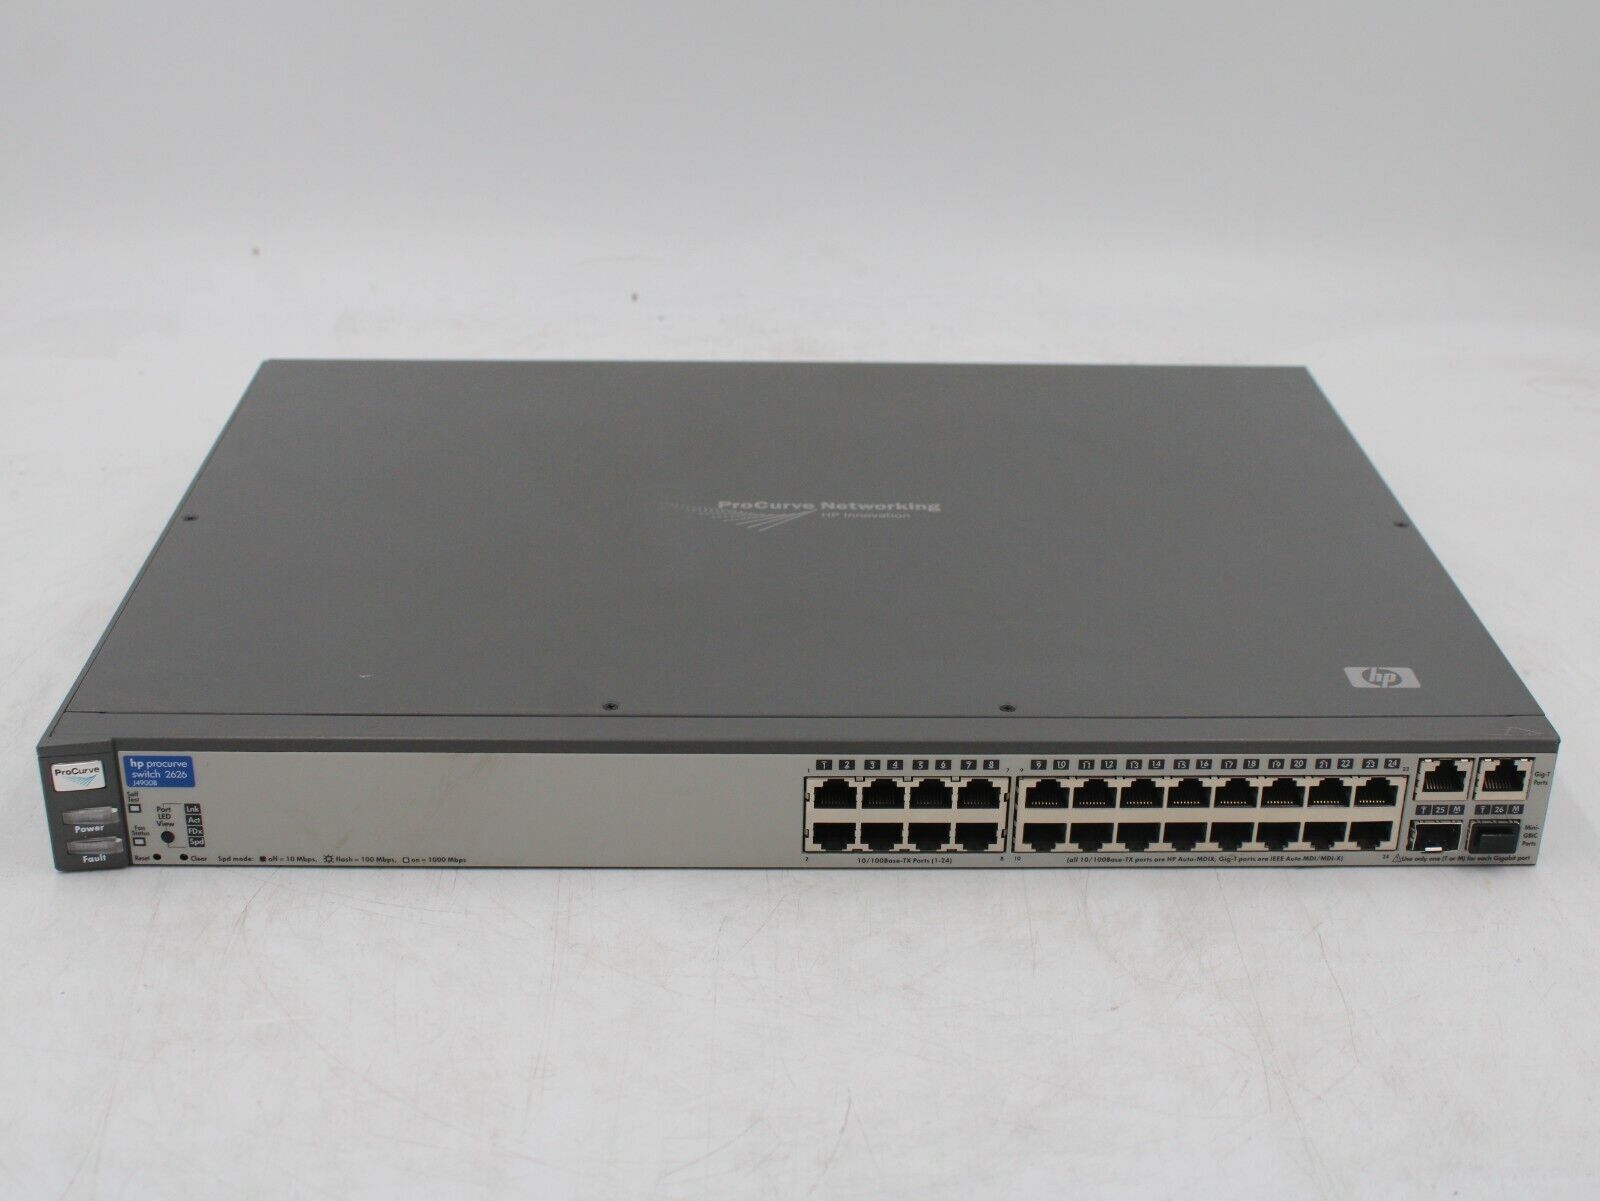 New Open Box HP ProCurve 2626 J4900B 24 Port Managed Fast Ethernet Switch 2x SFP